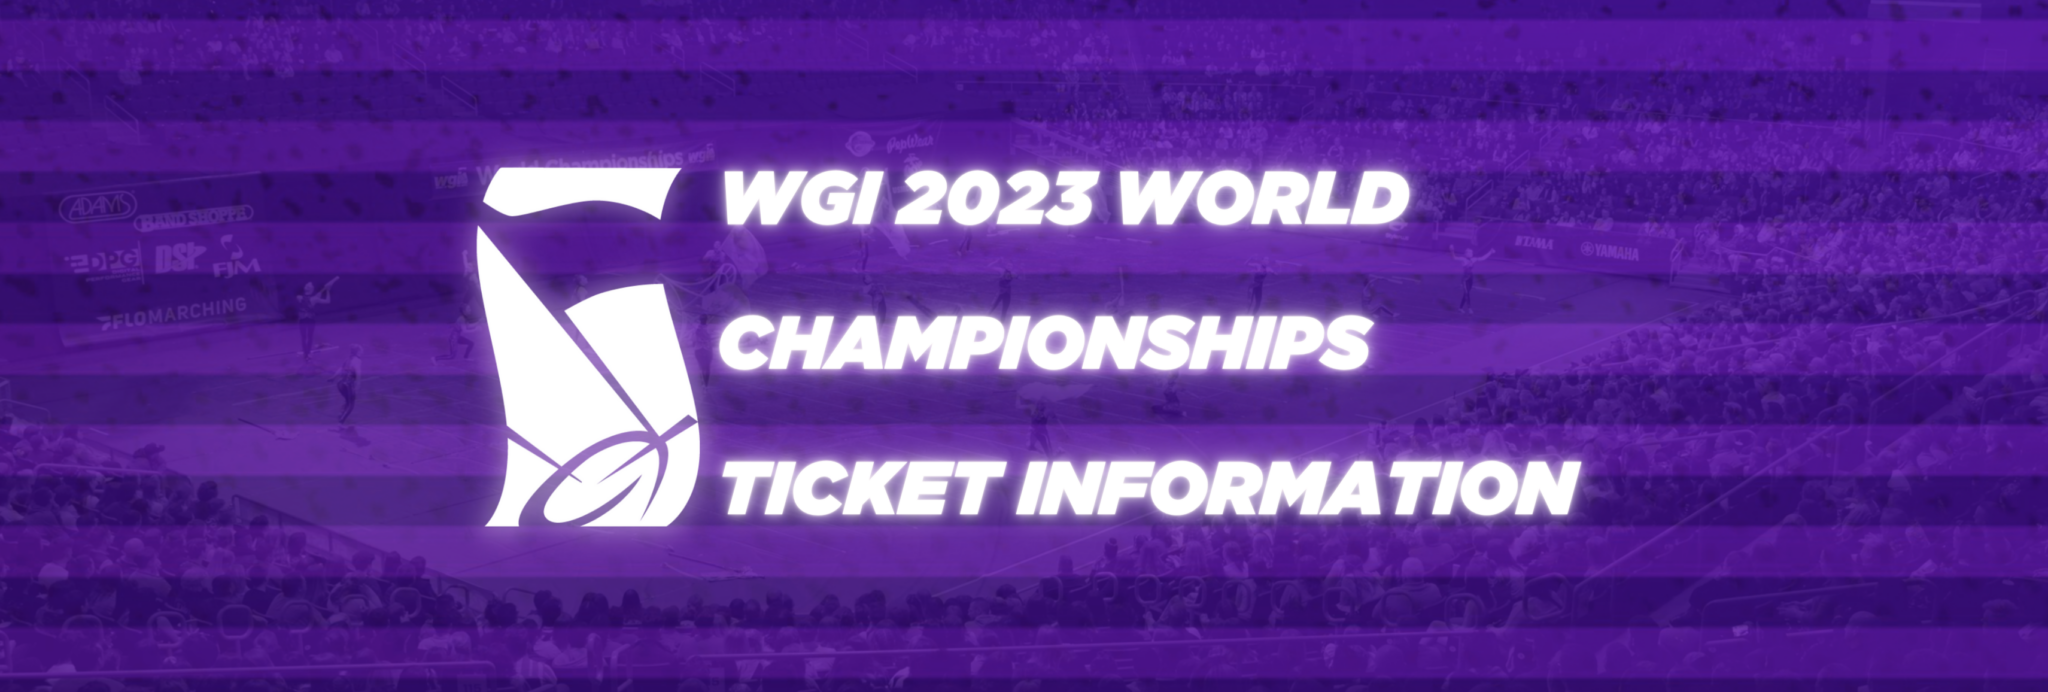 2023 World Championships Ticket Information WGI